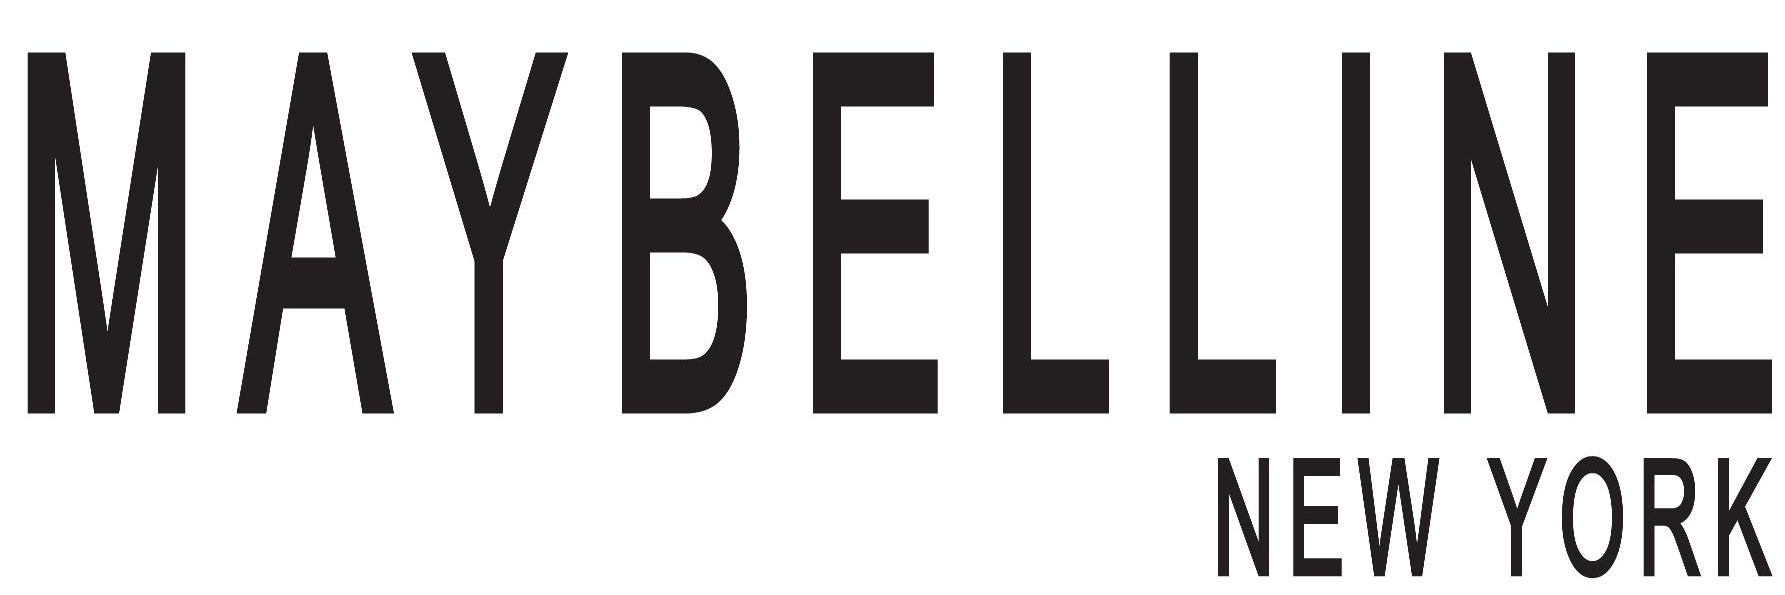 Косметика от Maybelline логотип бренда